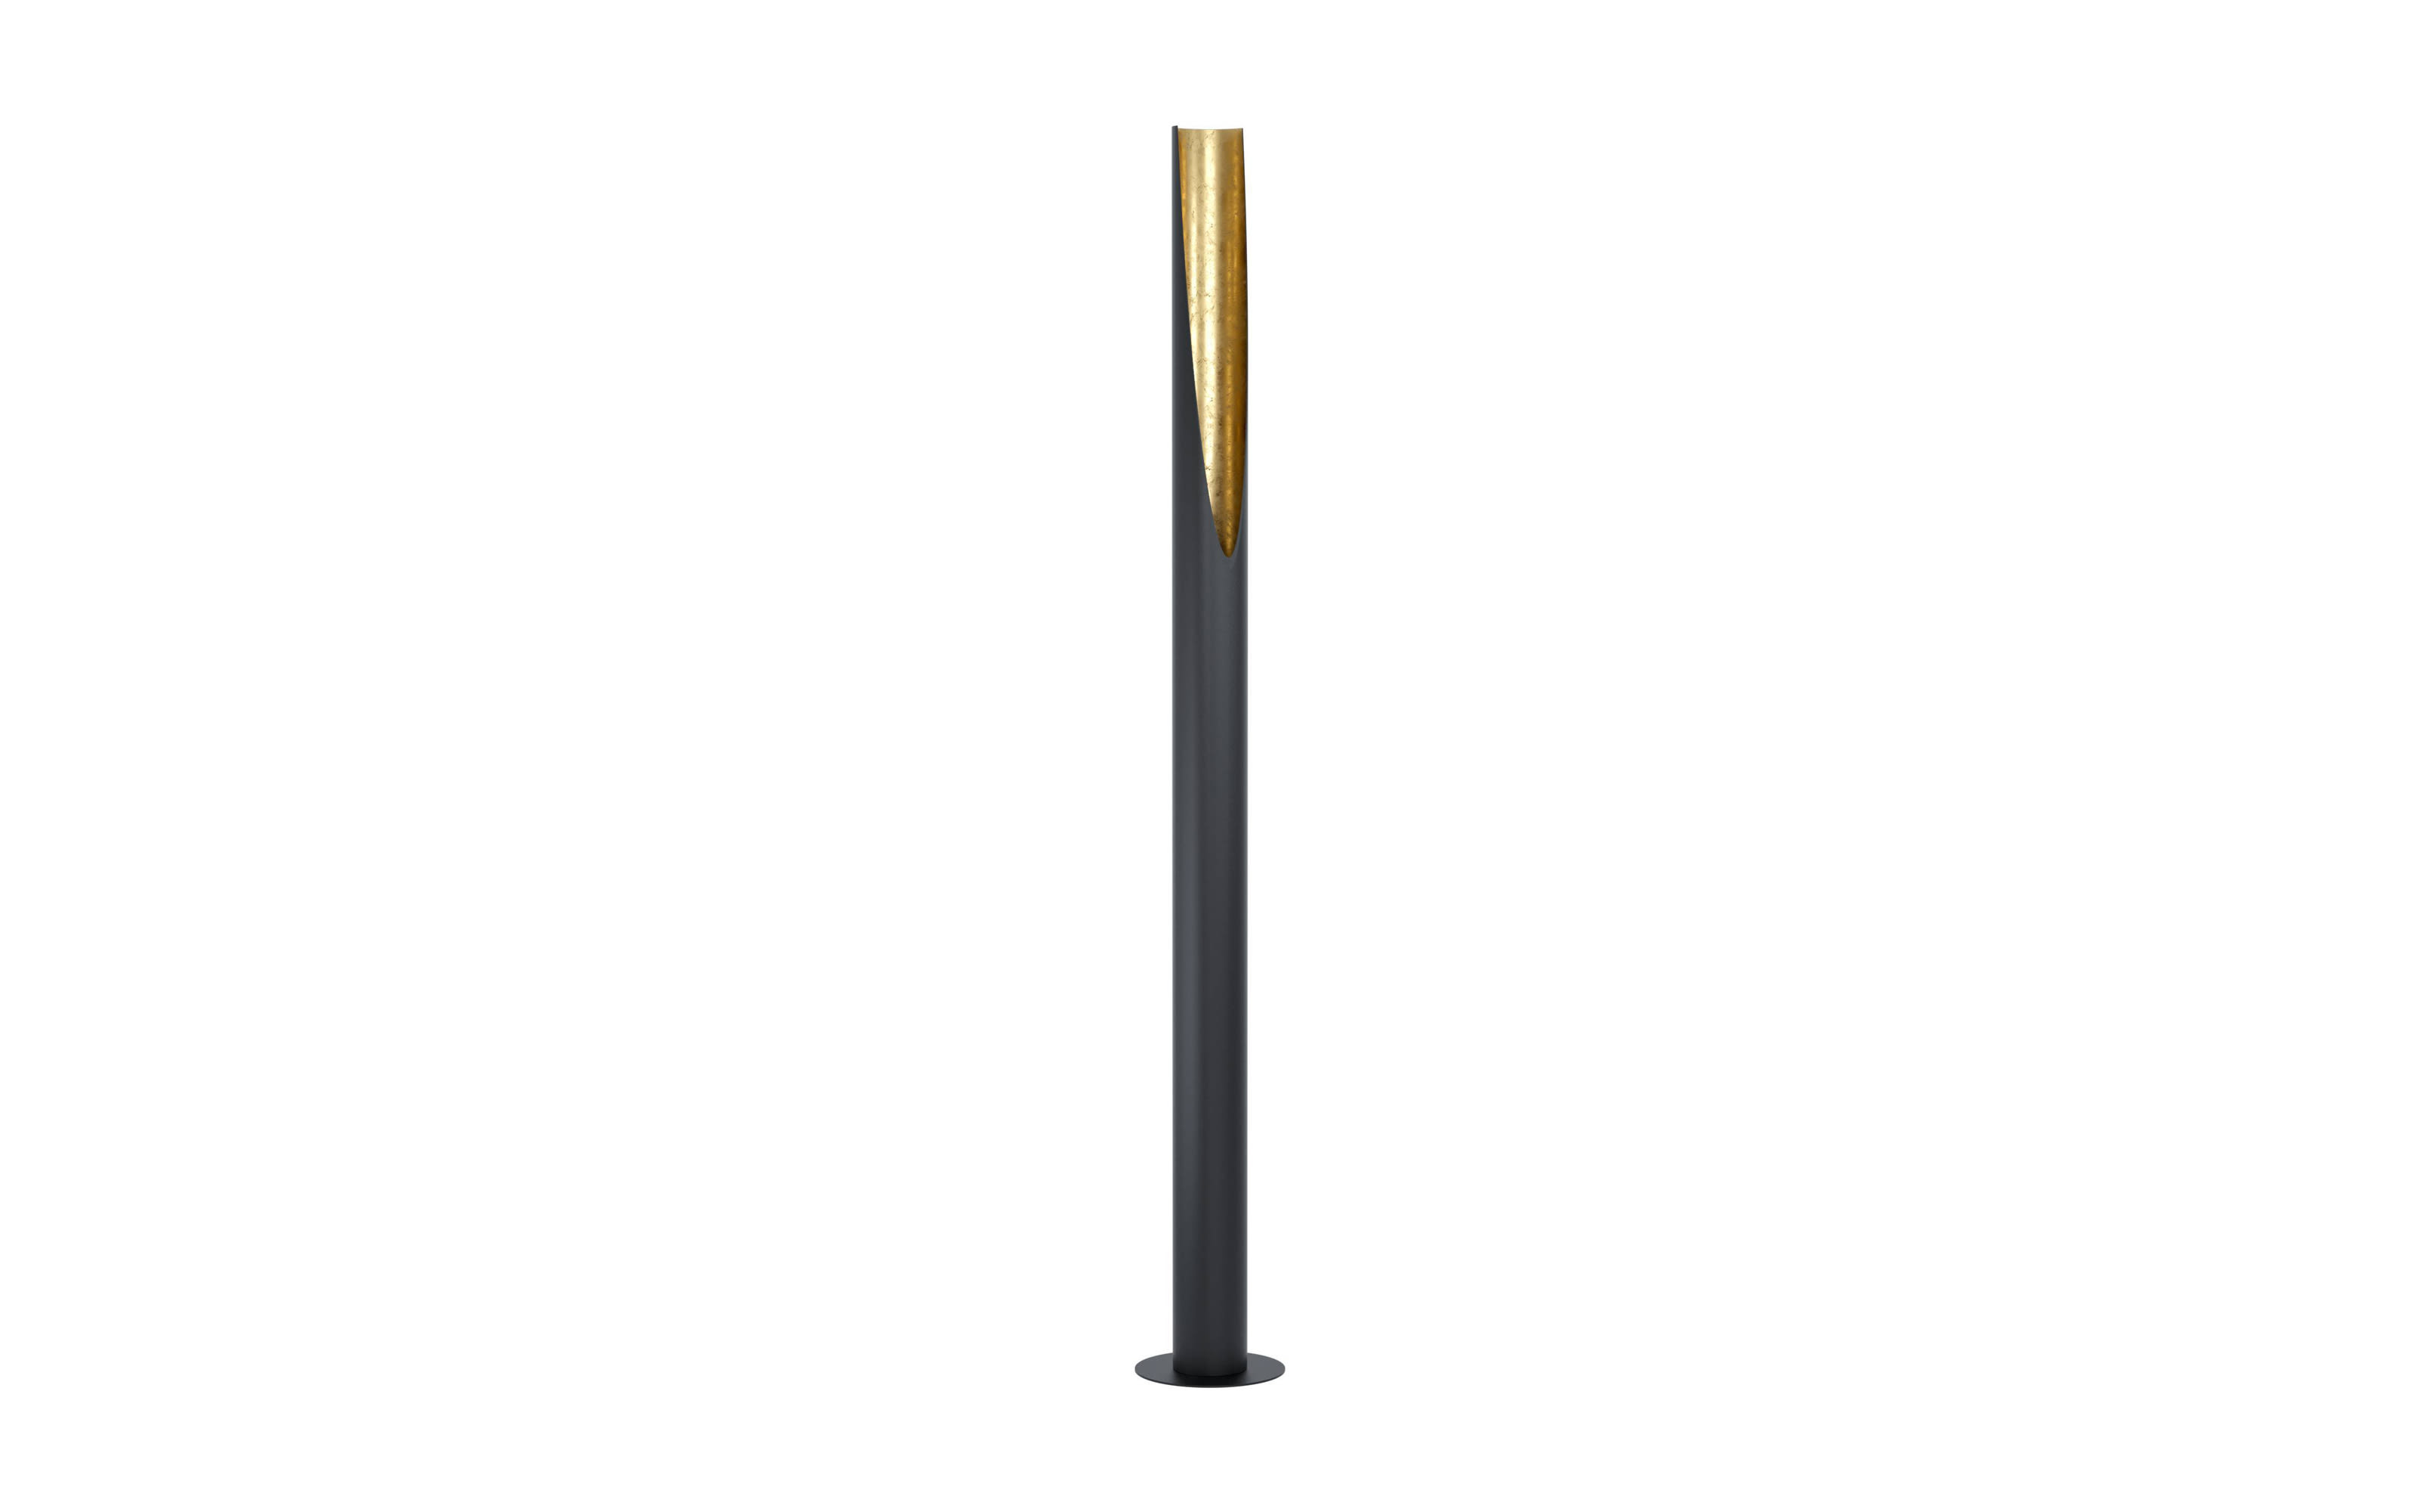  LED-Standleuchte Prebone in schwarz/goldfarbig, 180 cm 